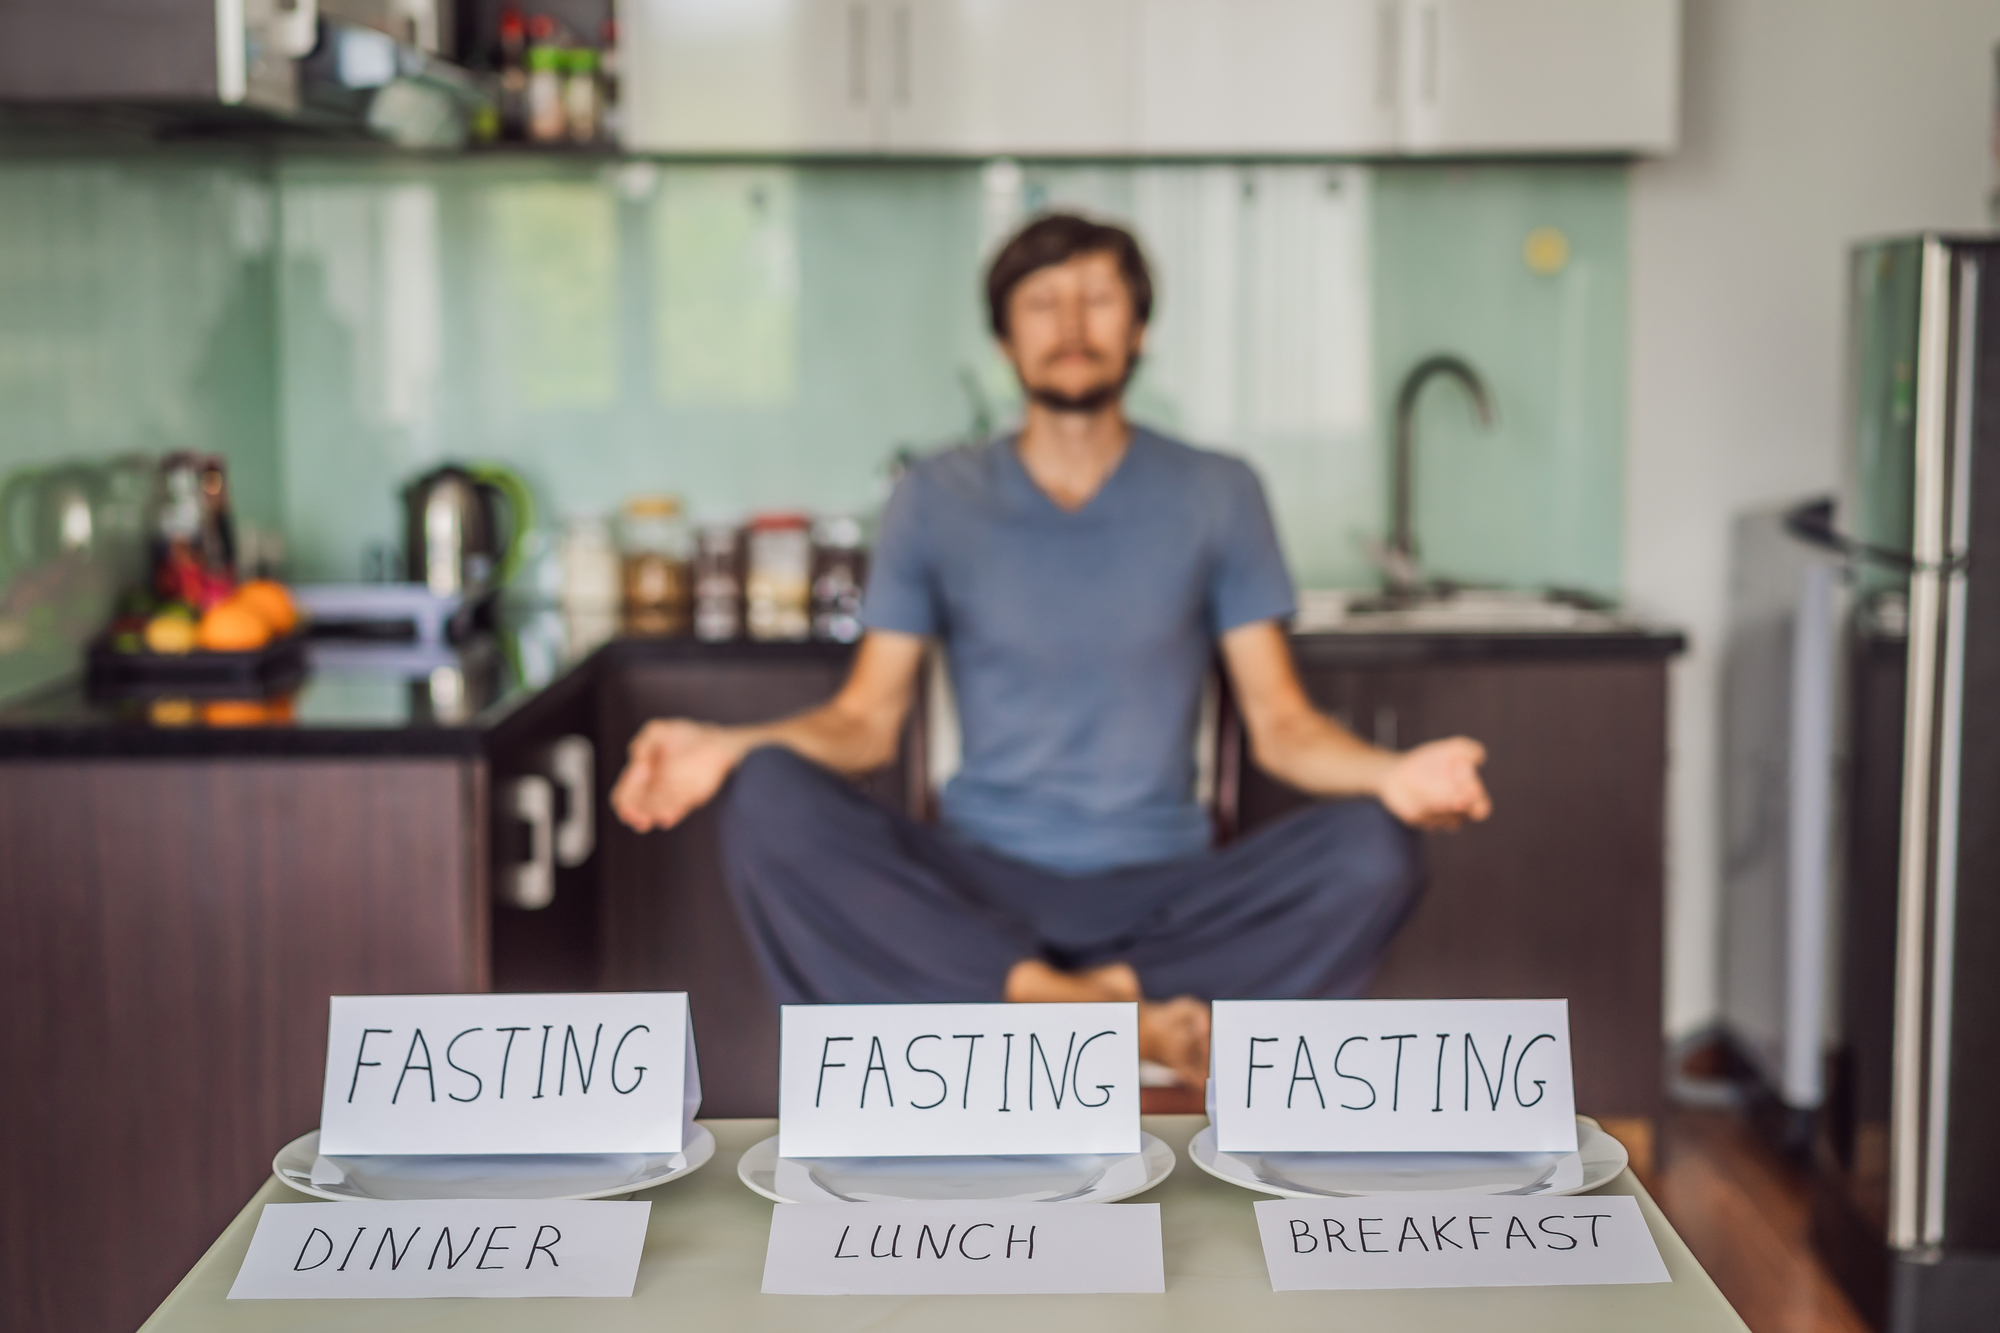 Man sitting cross legged while meditating behind three cards that say "fasting"